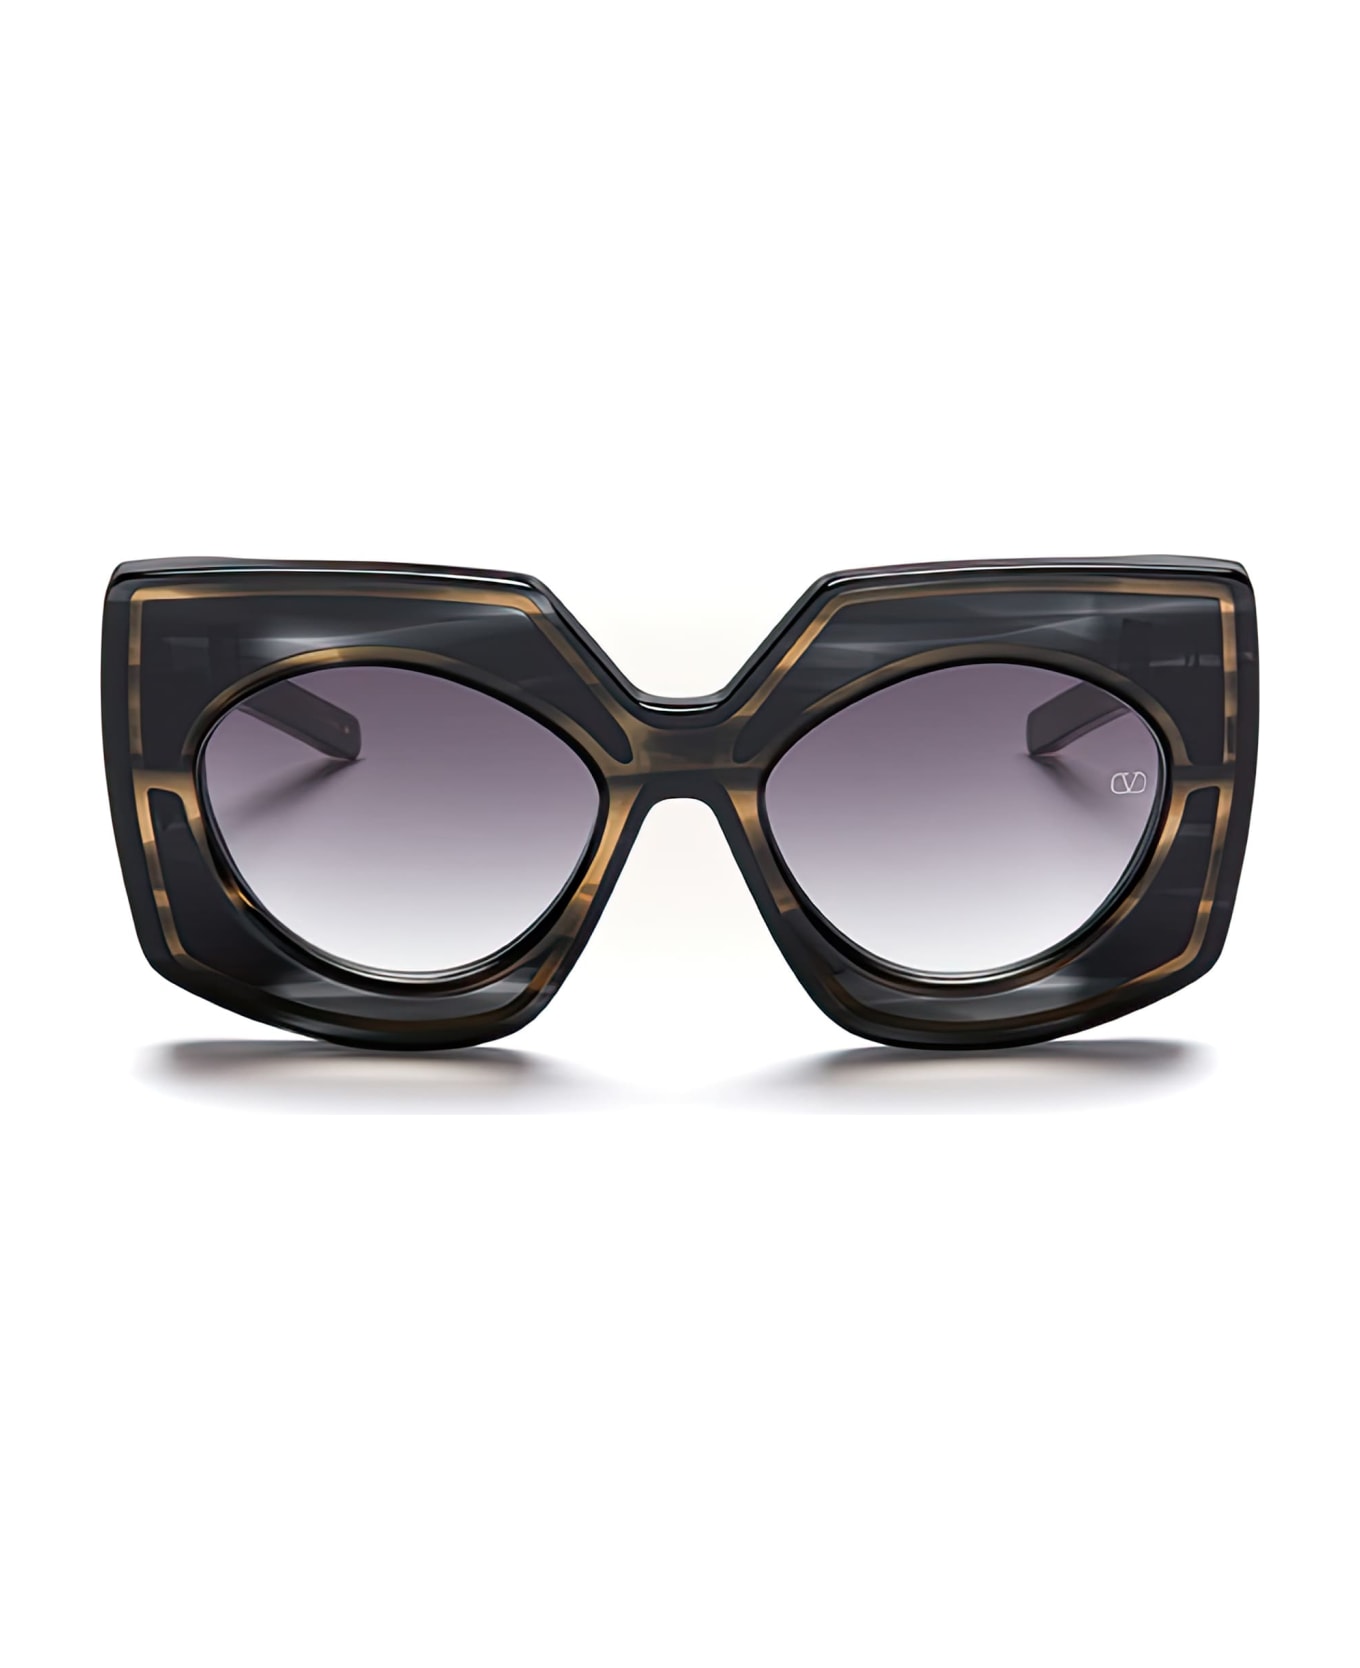 Valentino Eyewear V-soul - Black / Gold Sunglasses - Black サングラス